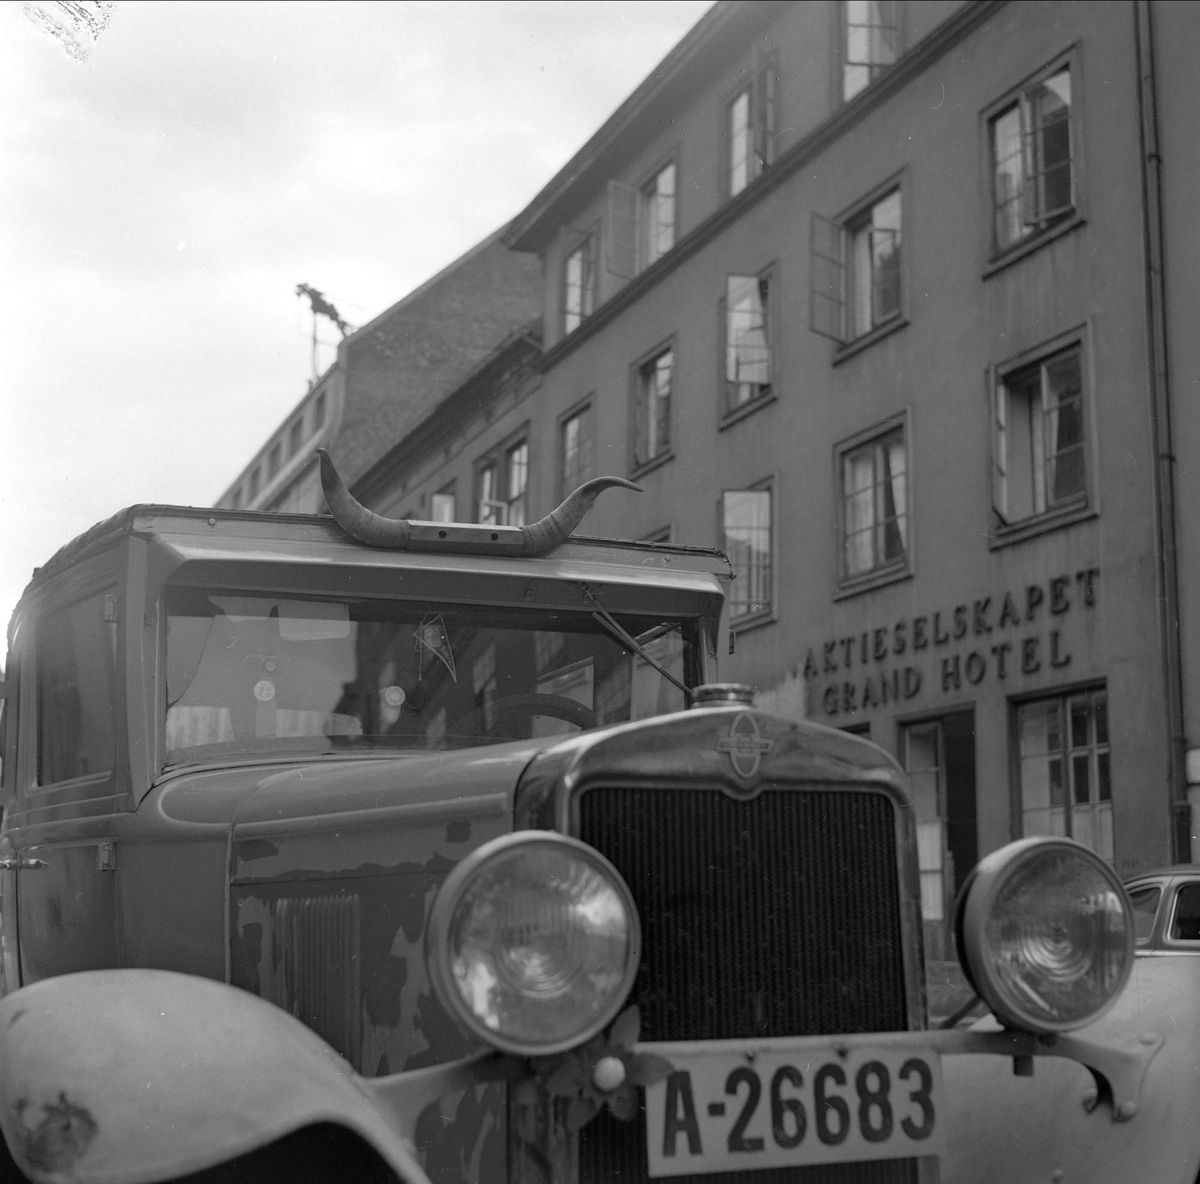 Lastebil med kuhorn, Oslo 1956. Antatt av typen Chevrolet 1929-30.